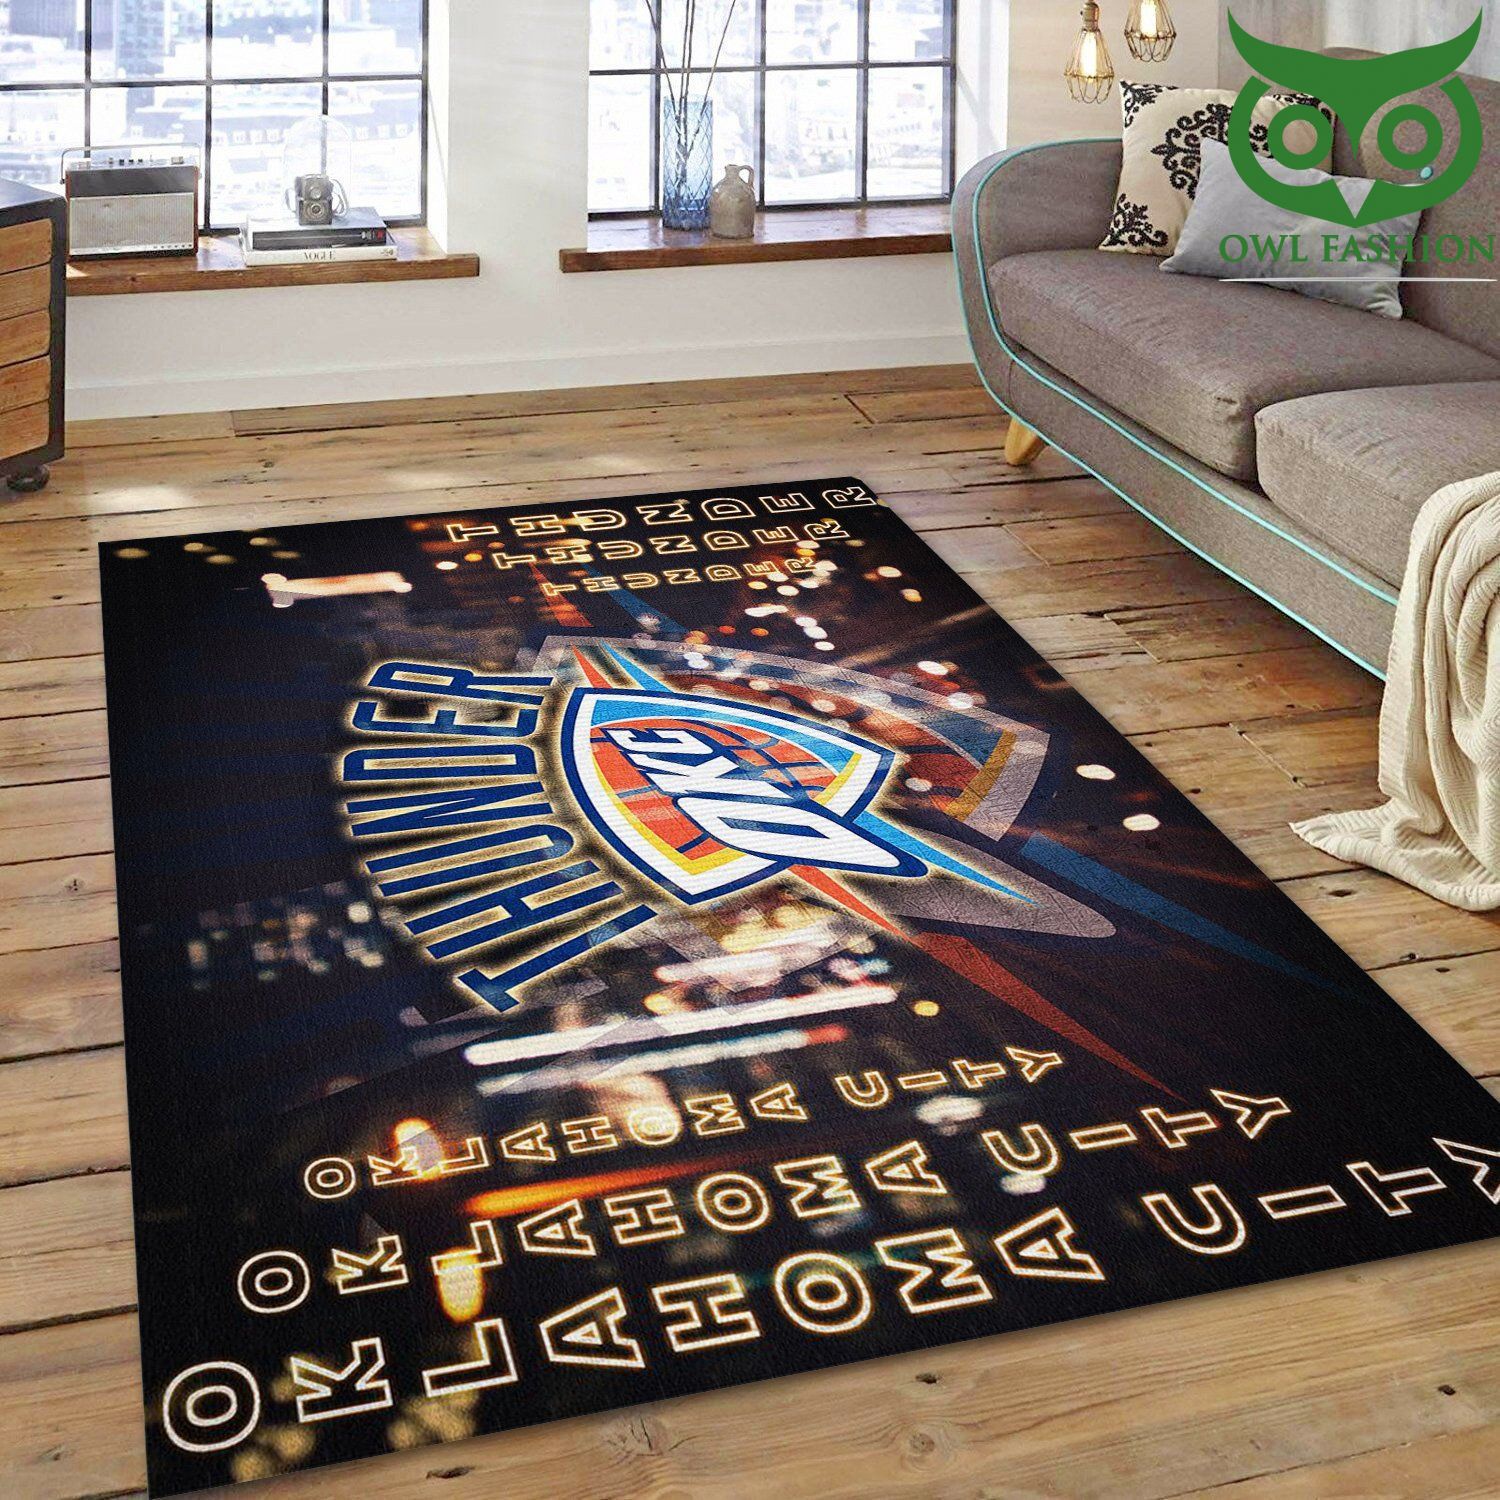 Oklahoma City Thunder NBA Area room decorate floor carpet rug 